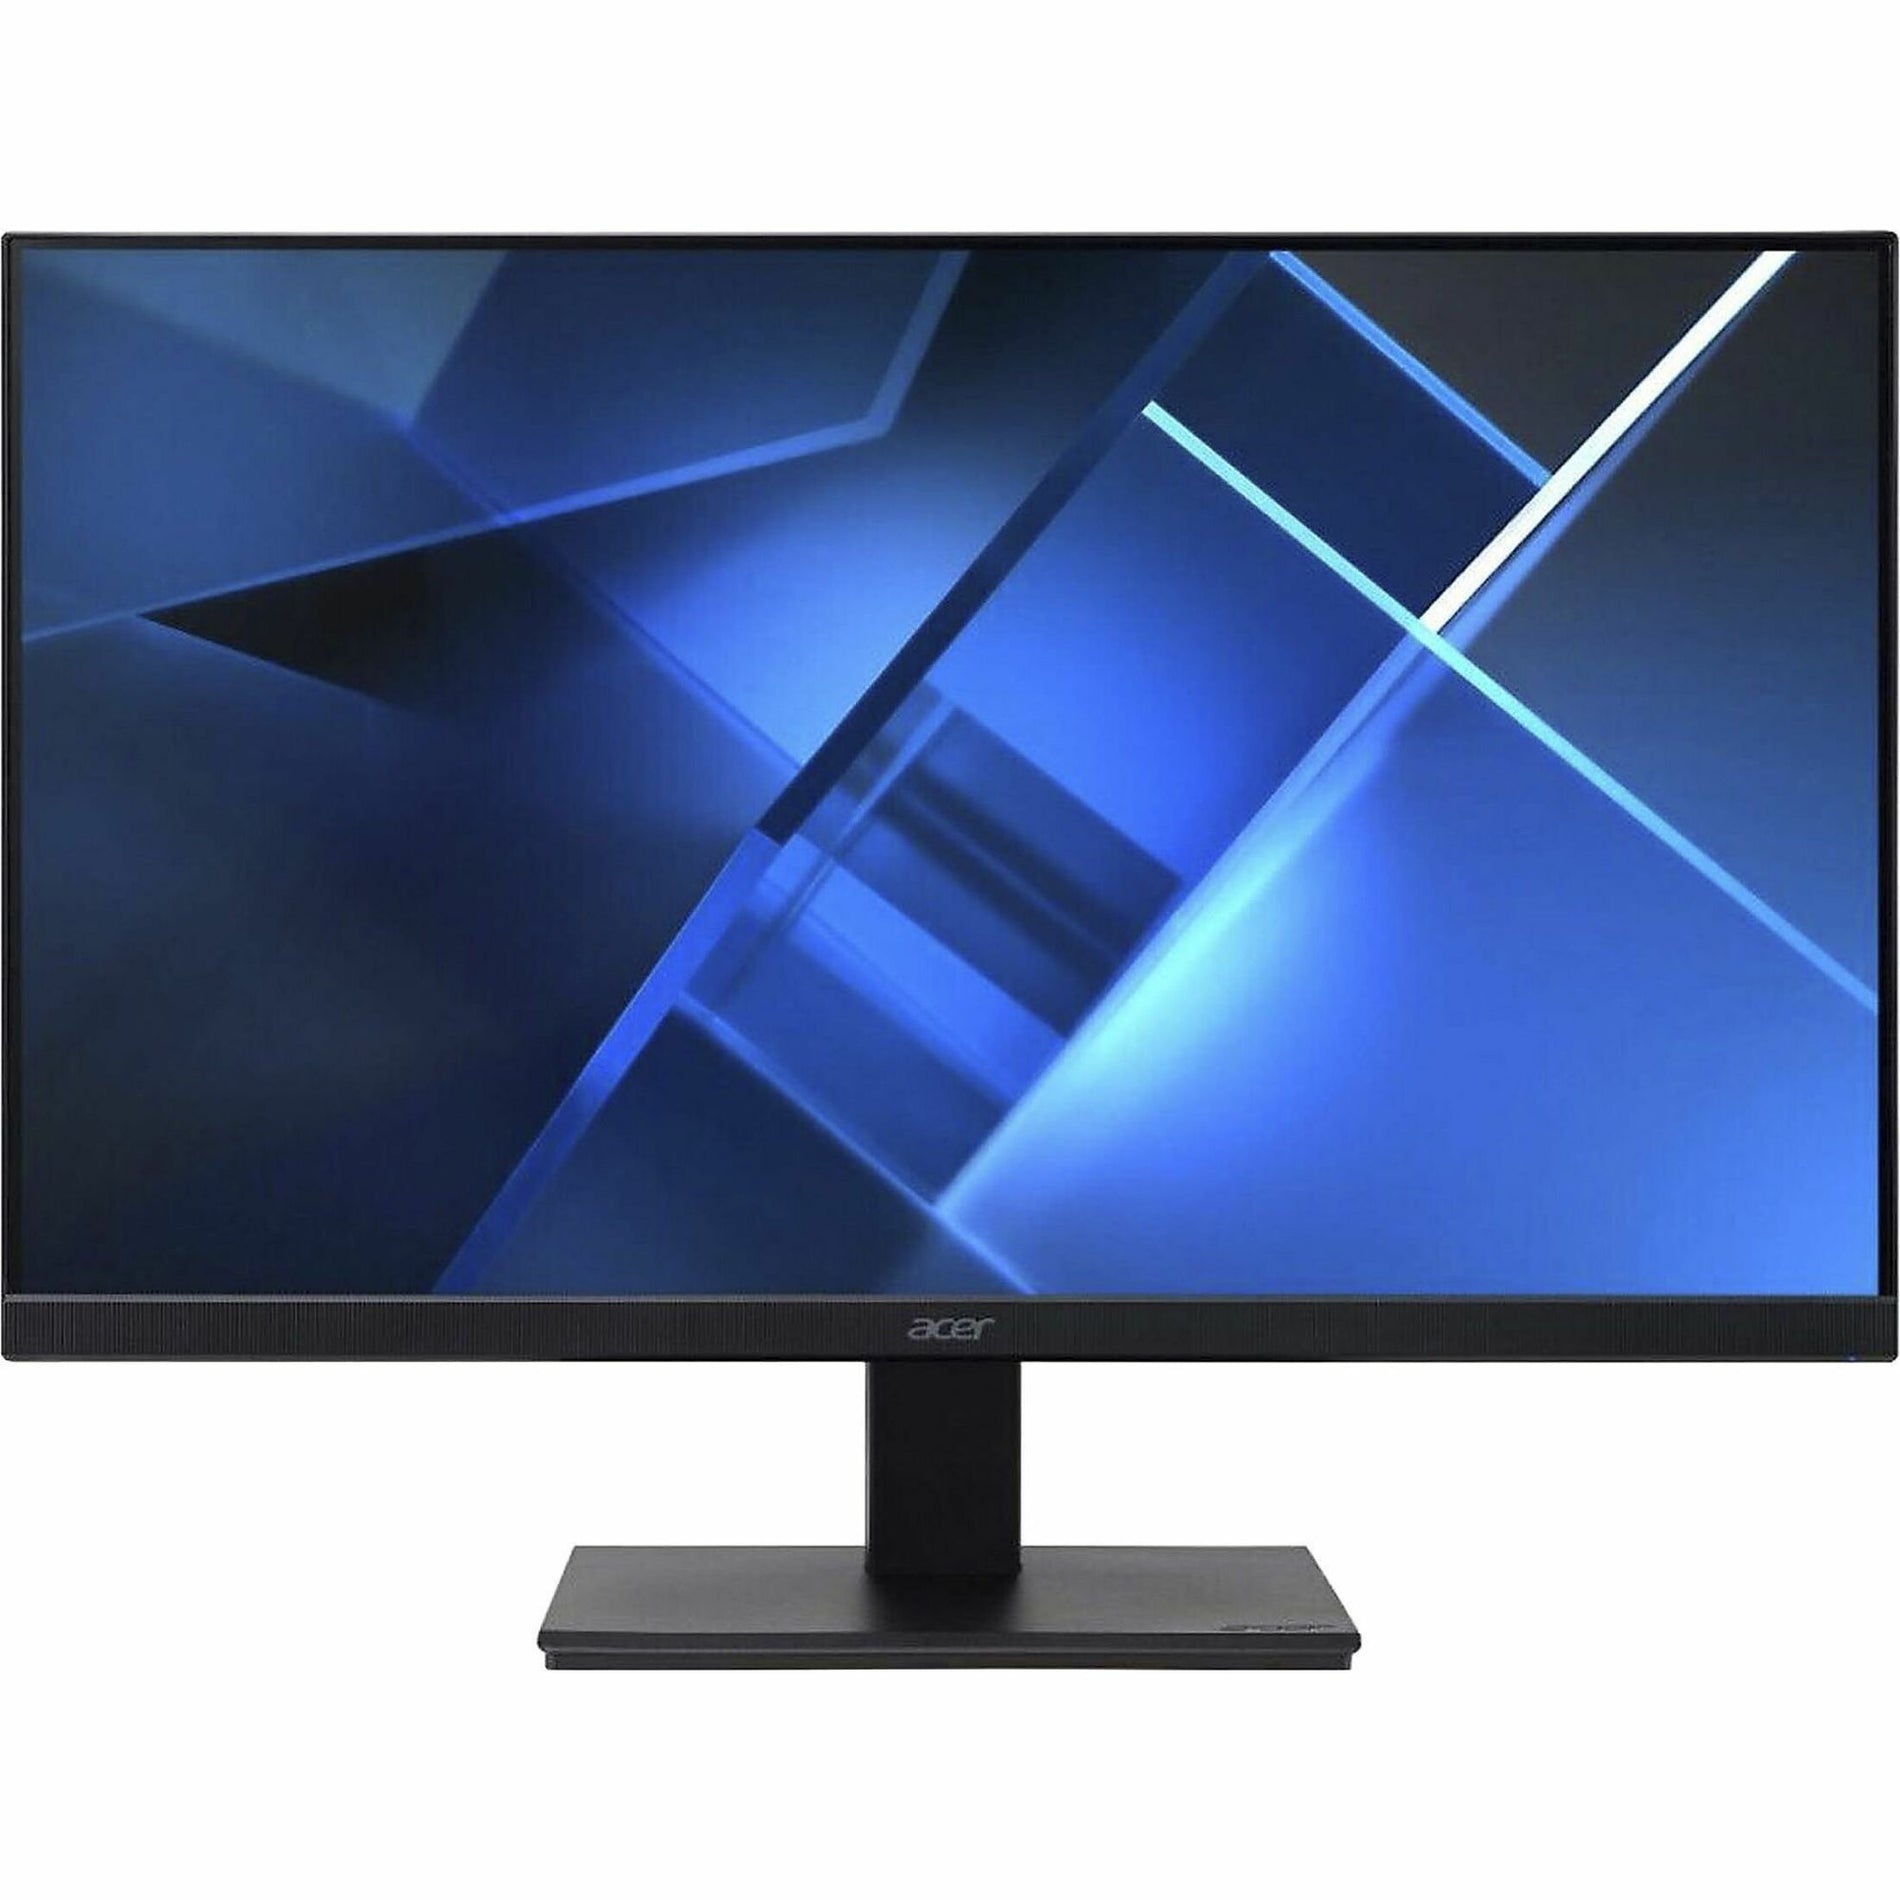 Acer UM.HV7AA.E04 Vero V7 V277 E 27" LCD Monitor, Full HD, 4ms GTG, FreeSync, Black